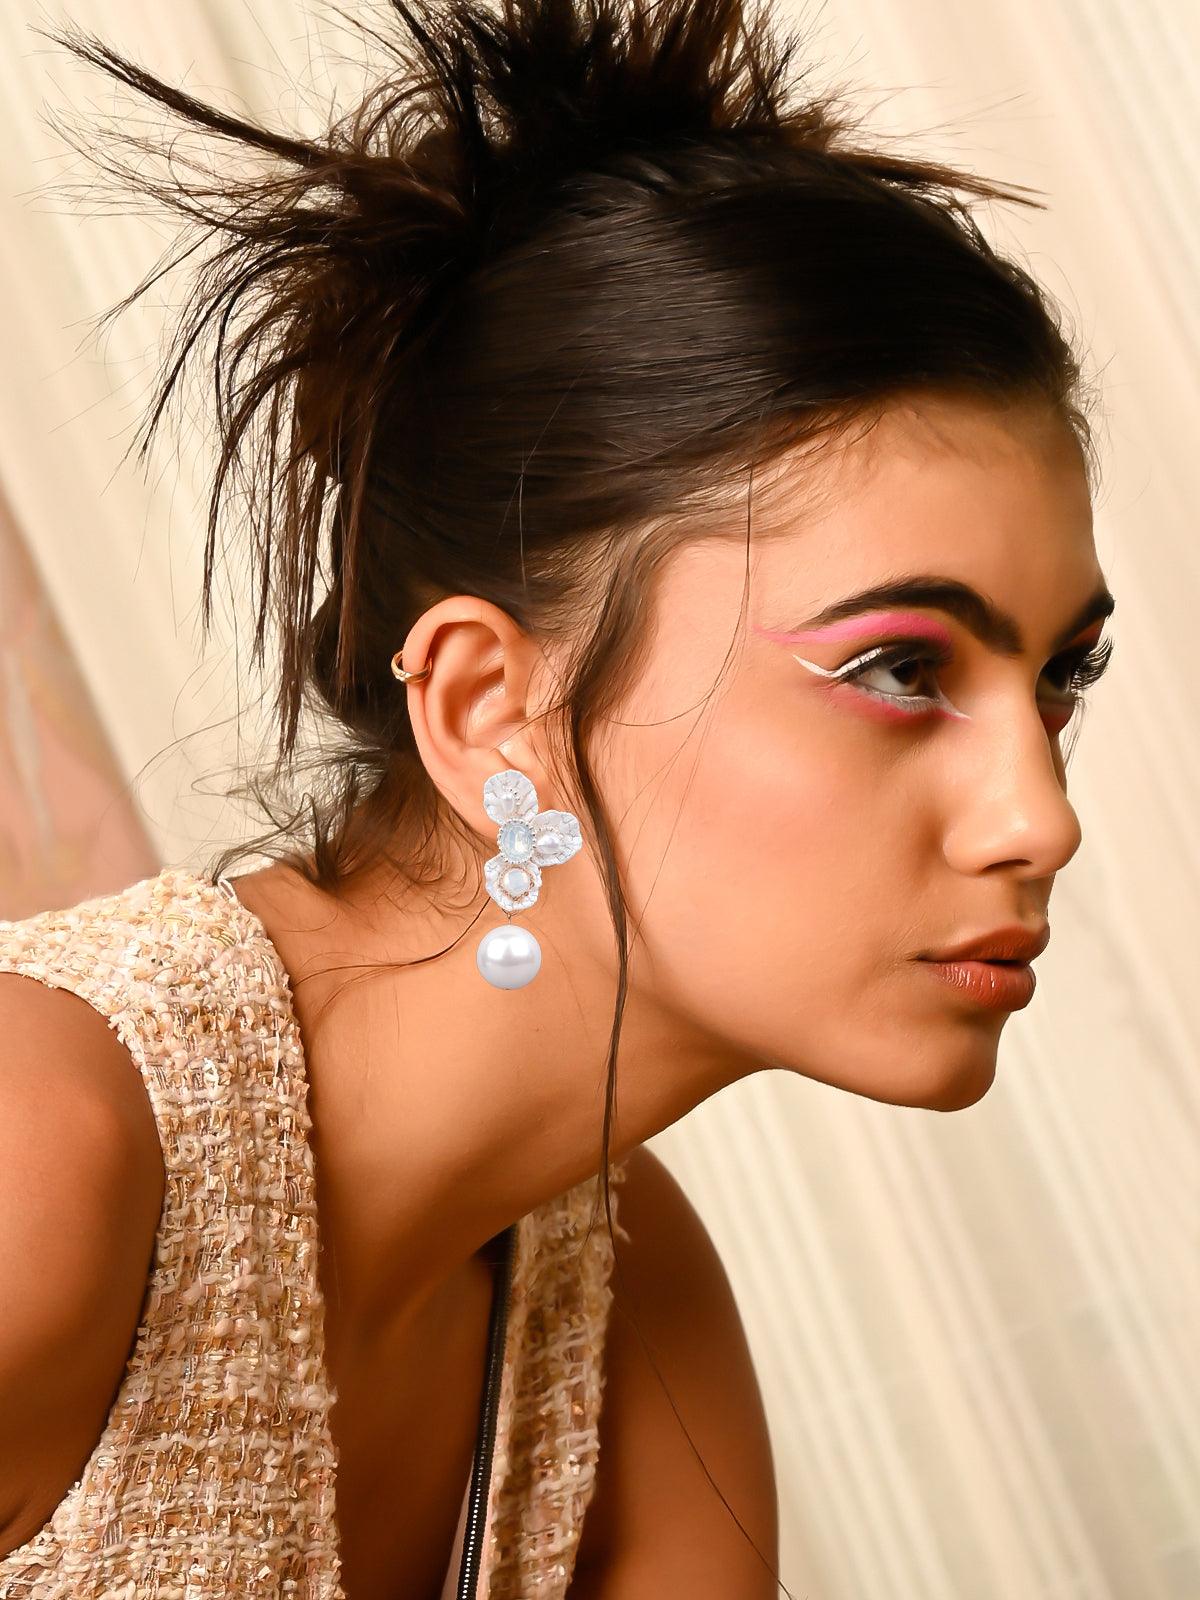 Women's White Gorgeous Stunning Statement Earrings - Odette